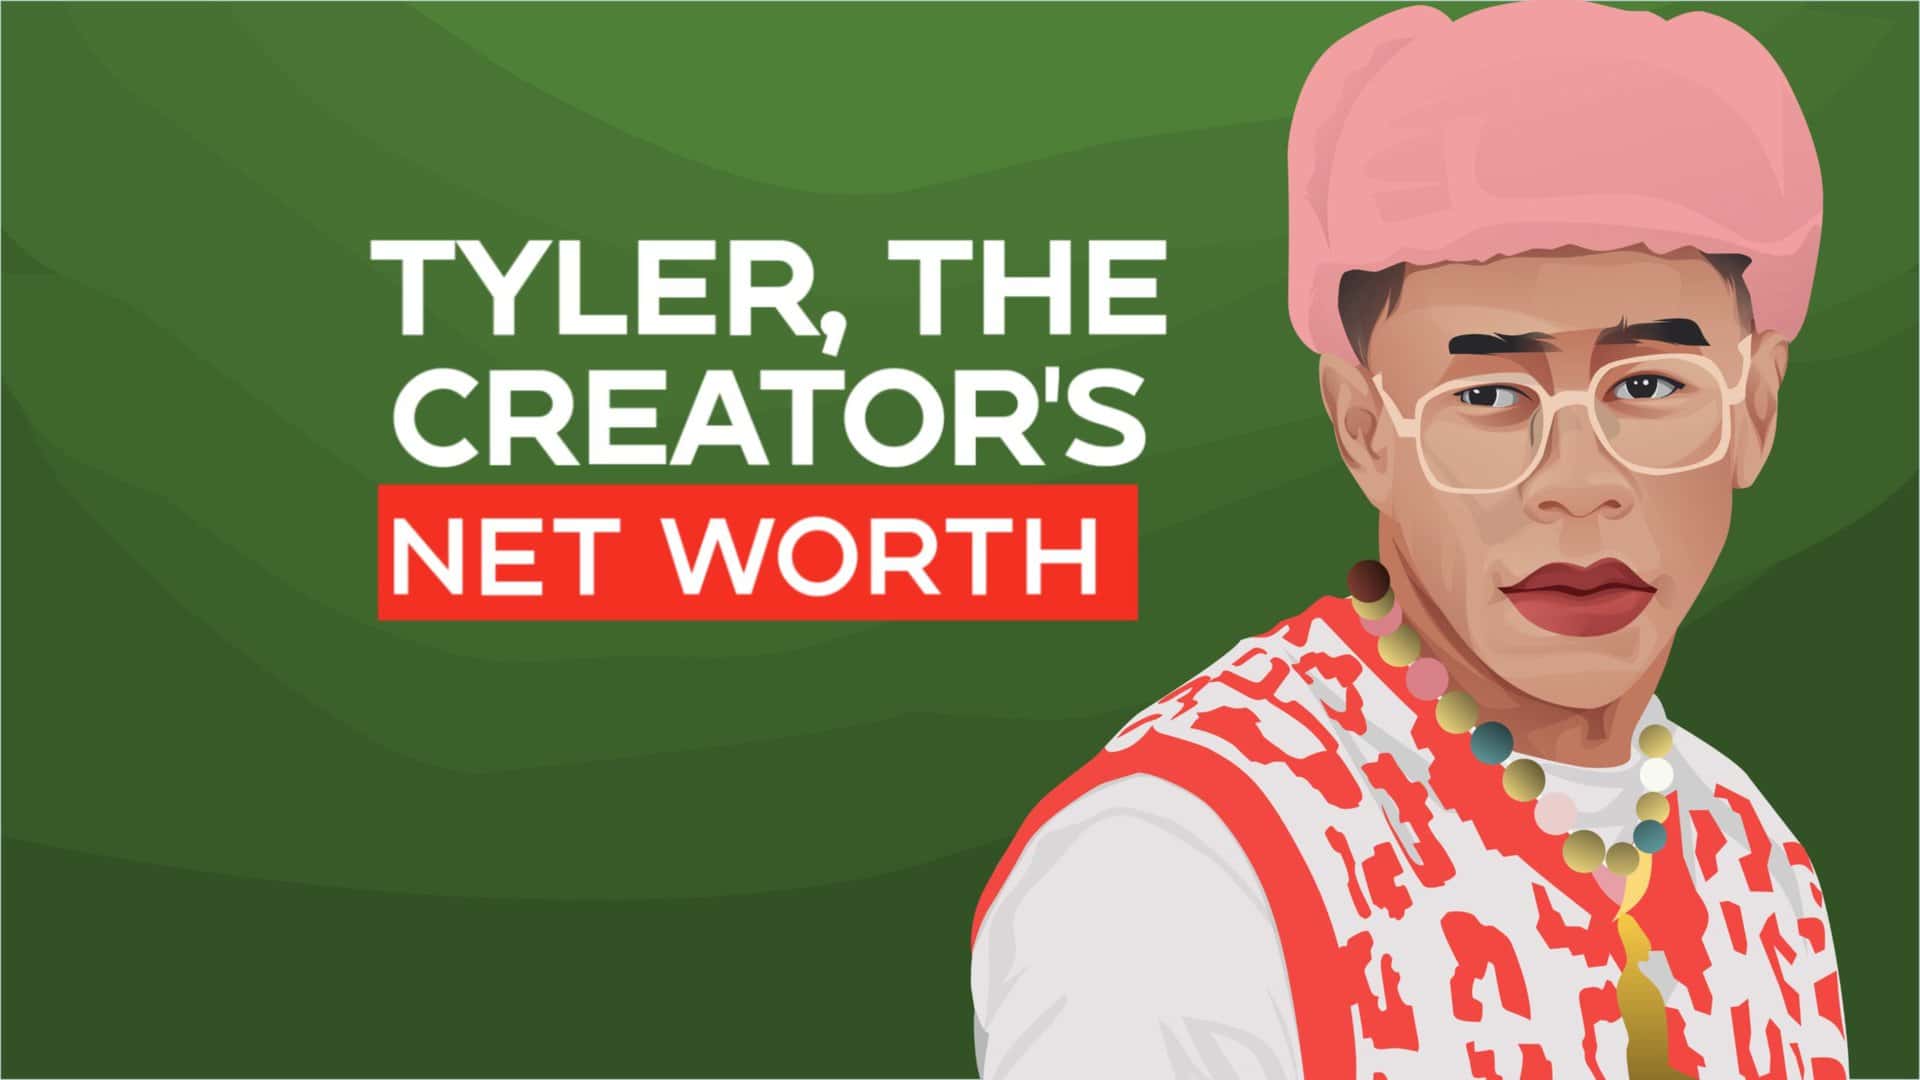 Tyler the Creator's net worth